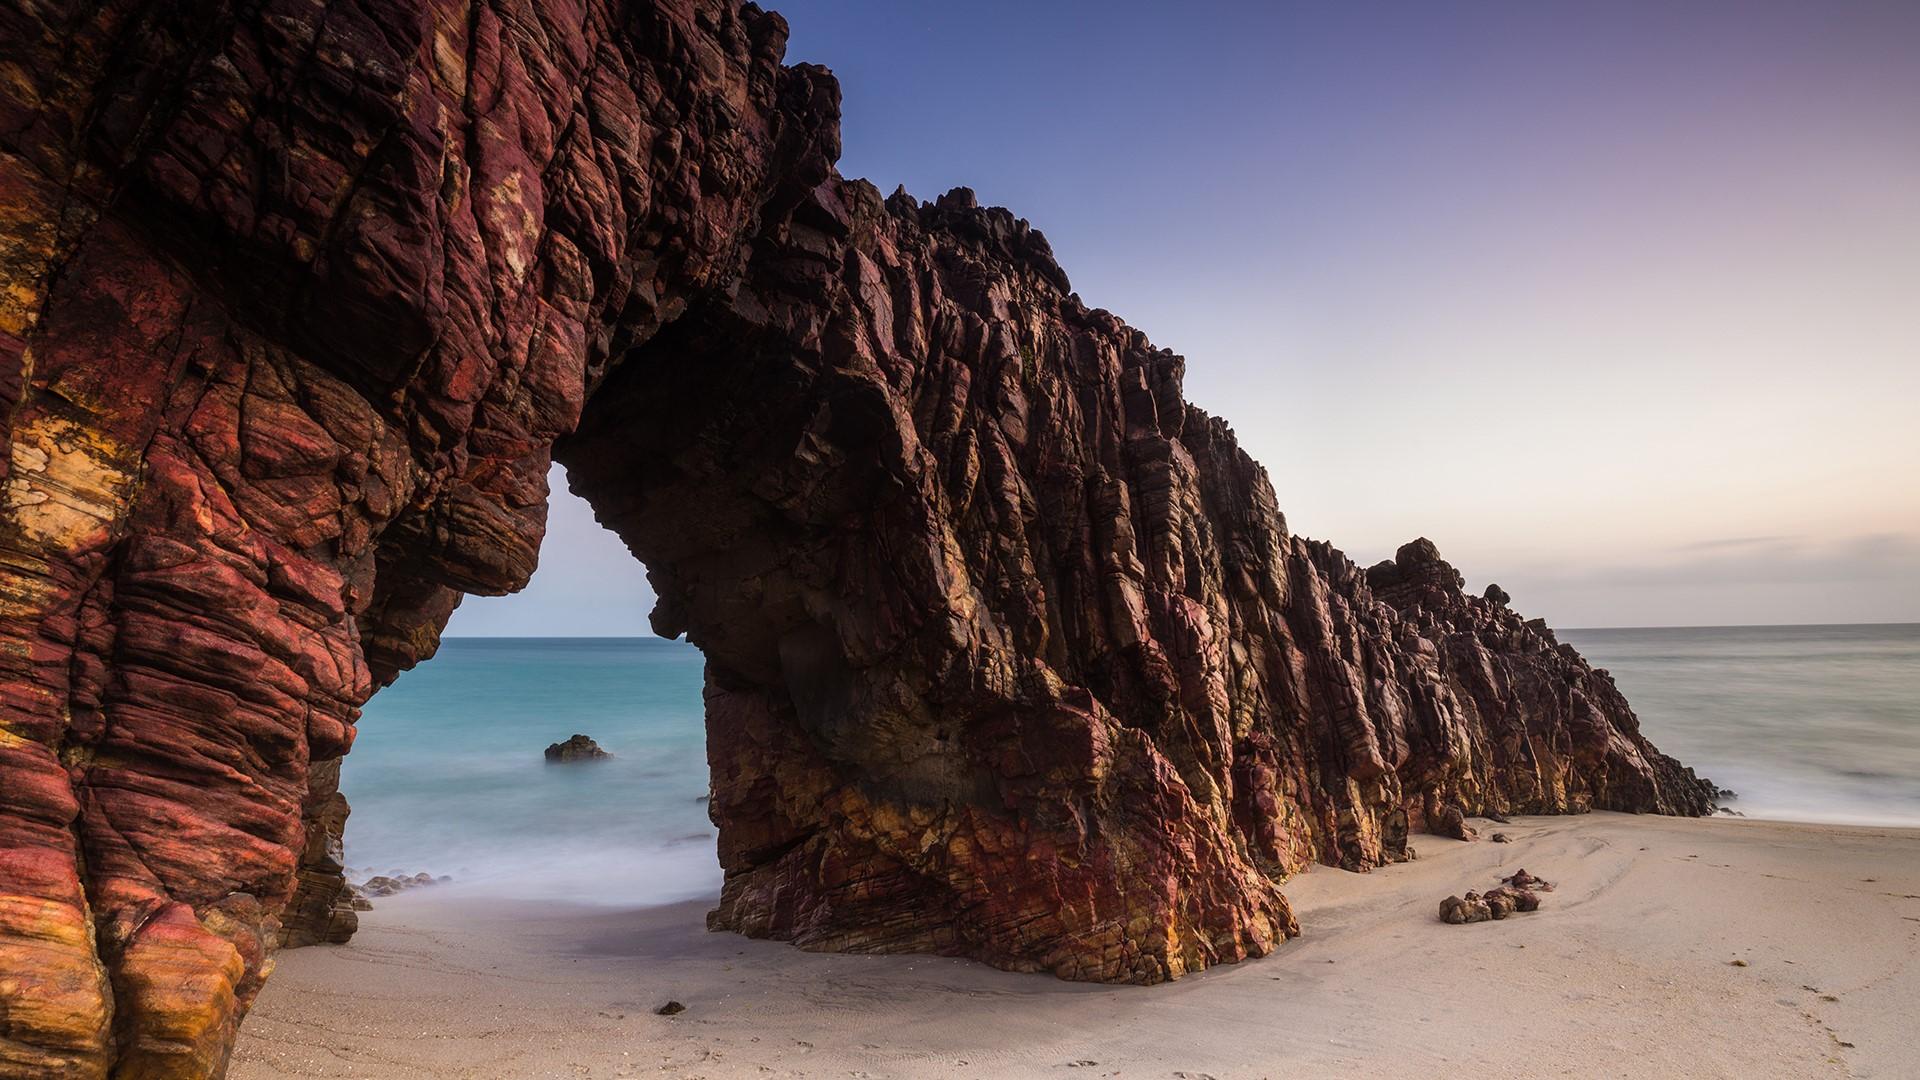 Pedra Furada rock formation on Jericoacoara beach, Brazil. Windows